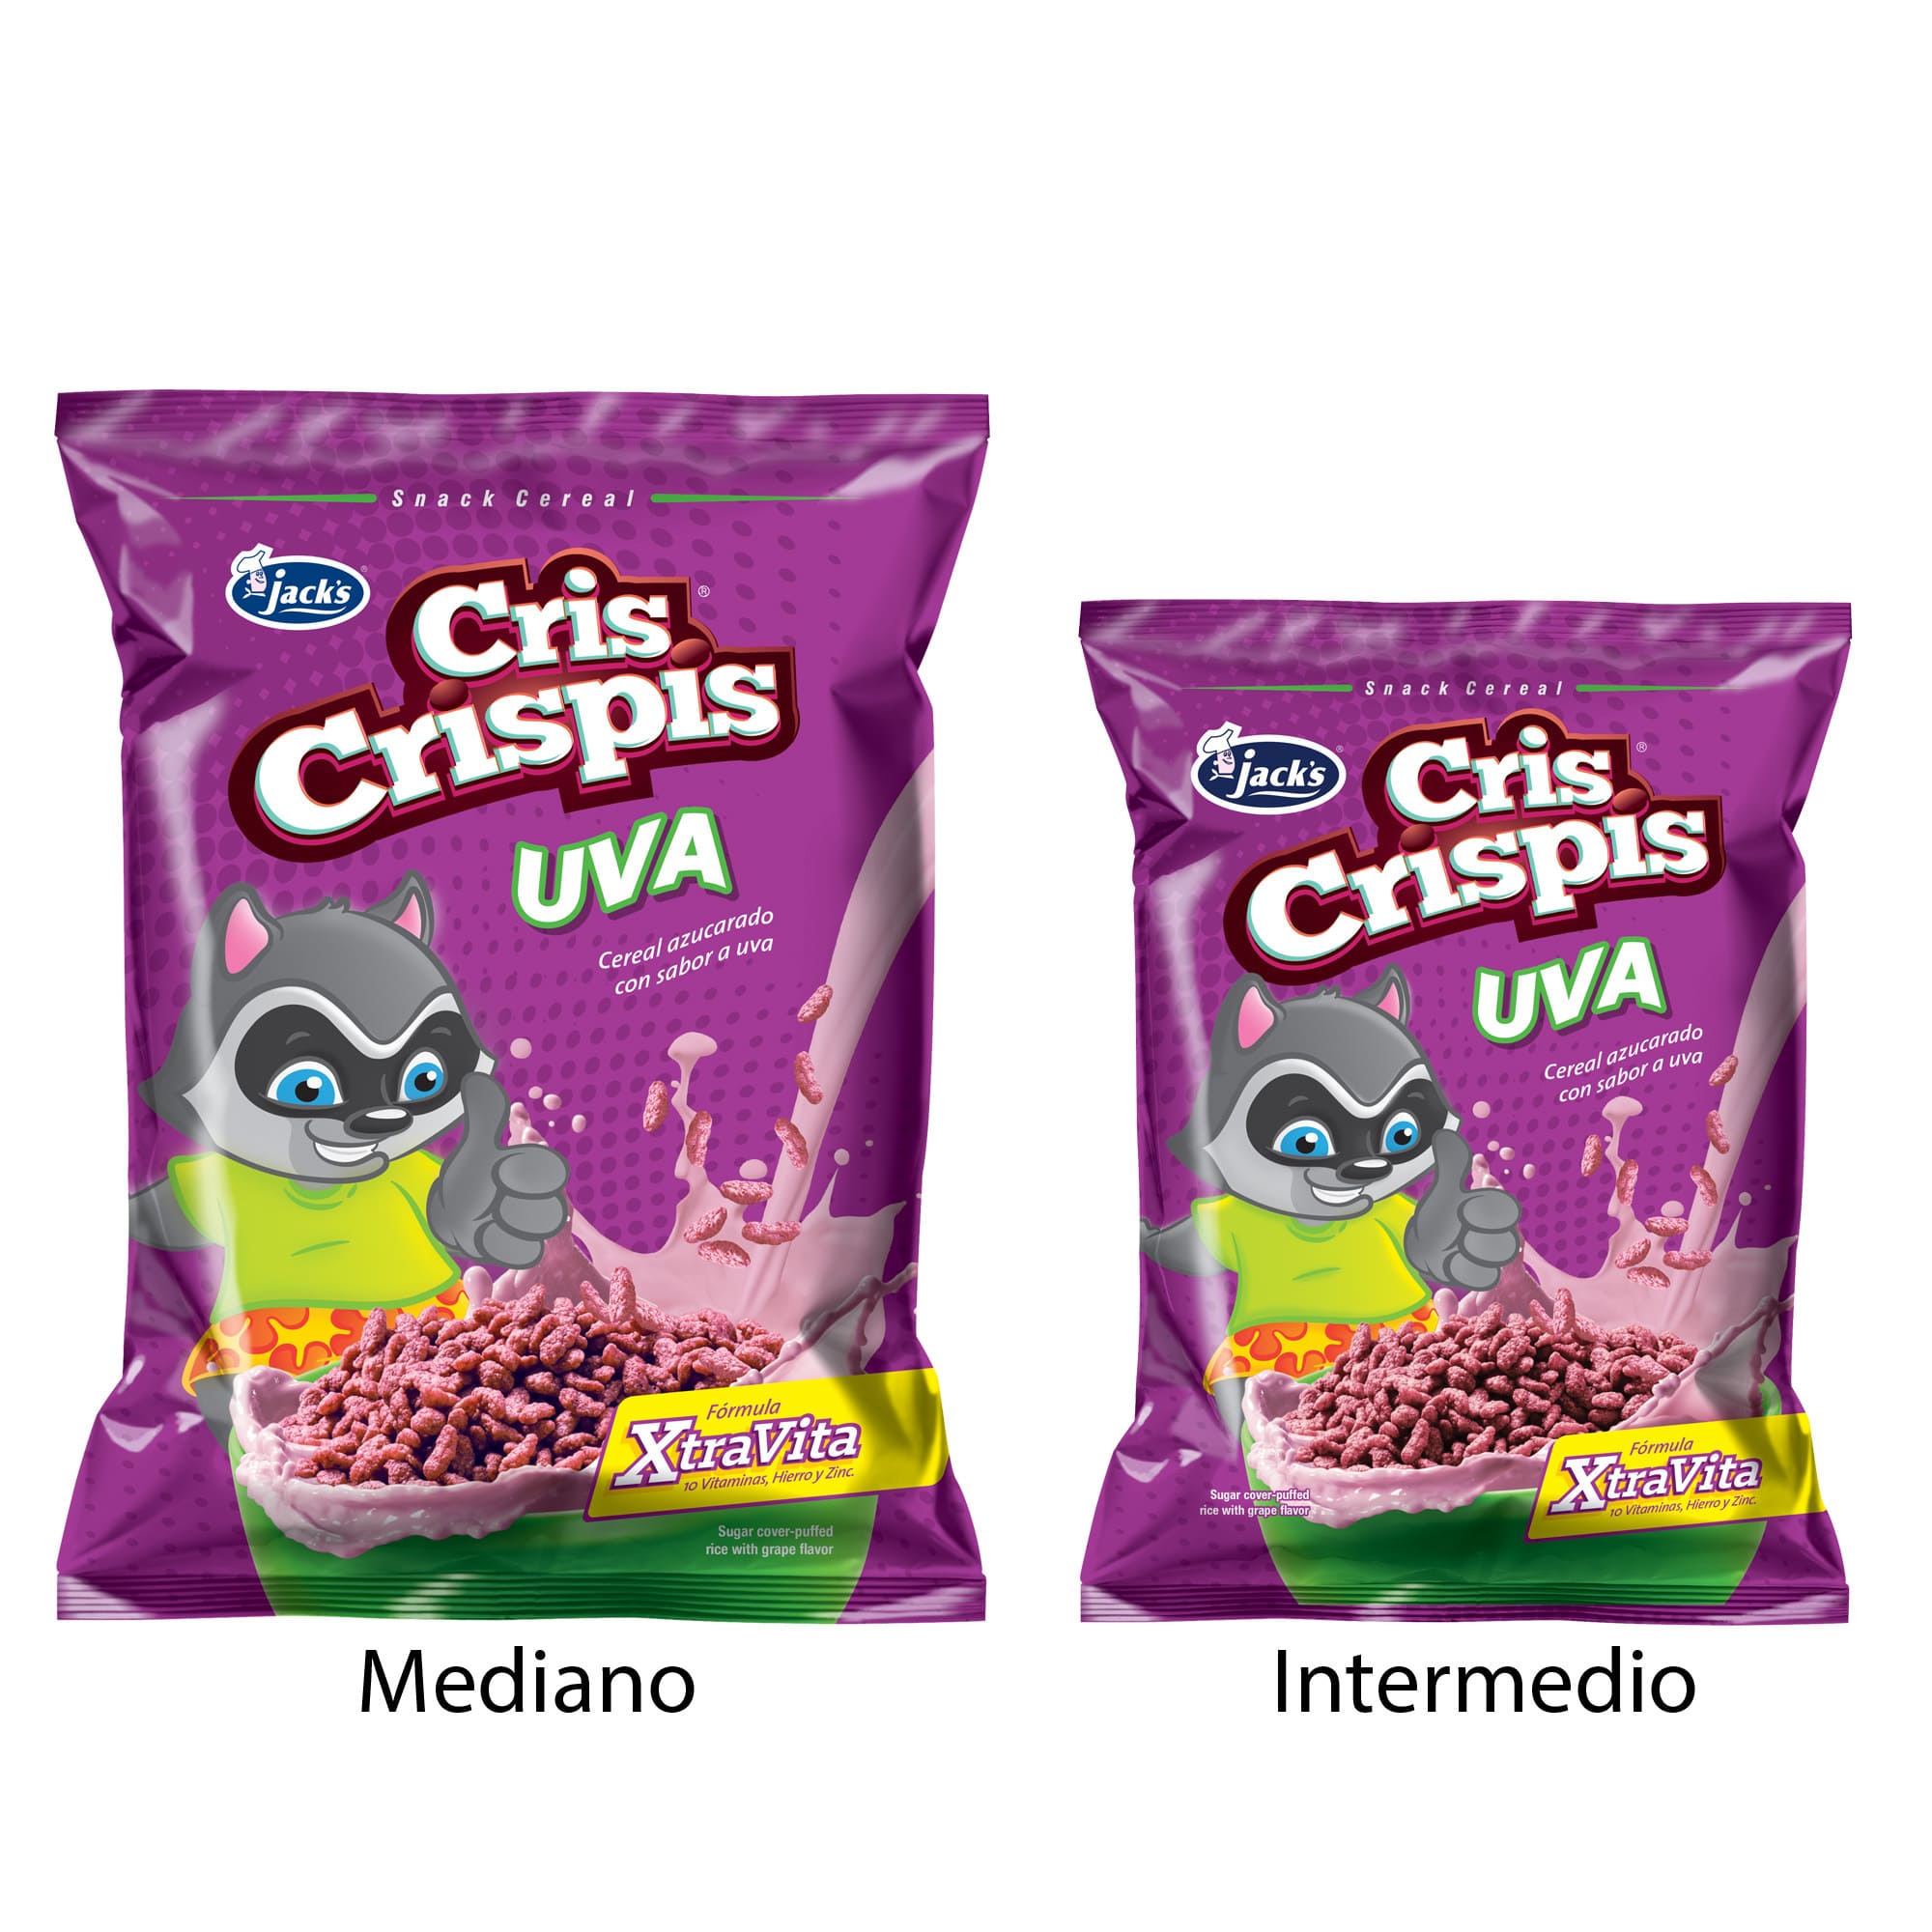 CRIS CRISPIS UVA cereales presentac pag web